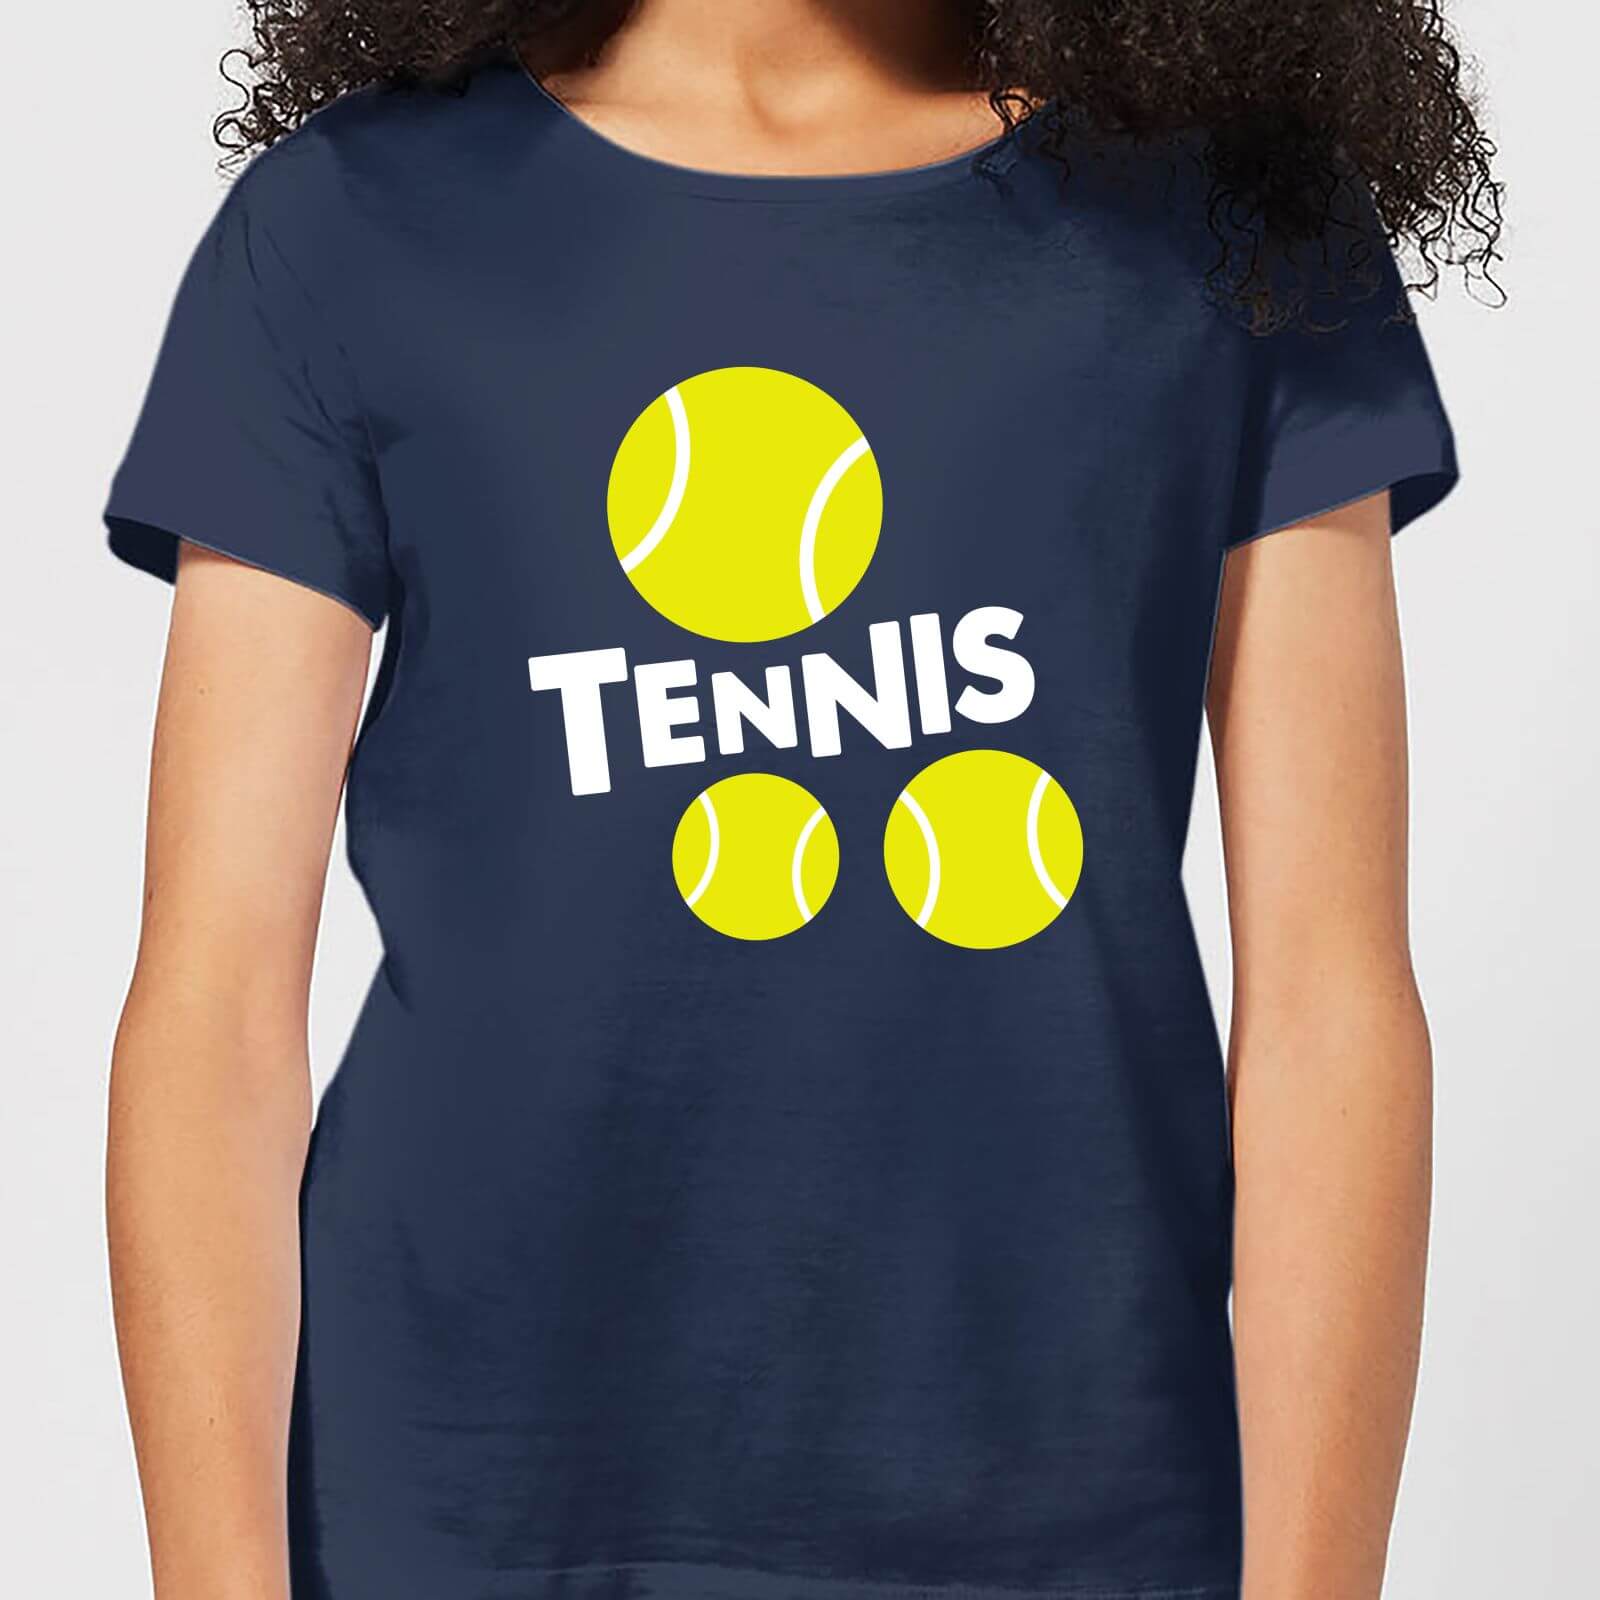 Tennis Balls Womens T-Shirt - Navy - S - Navy